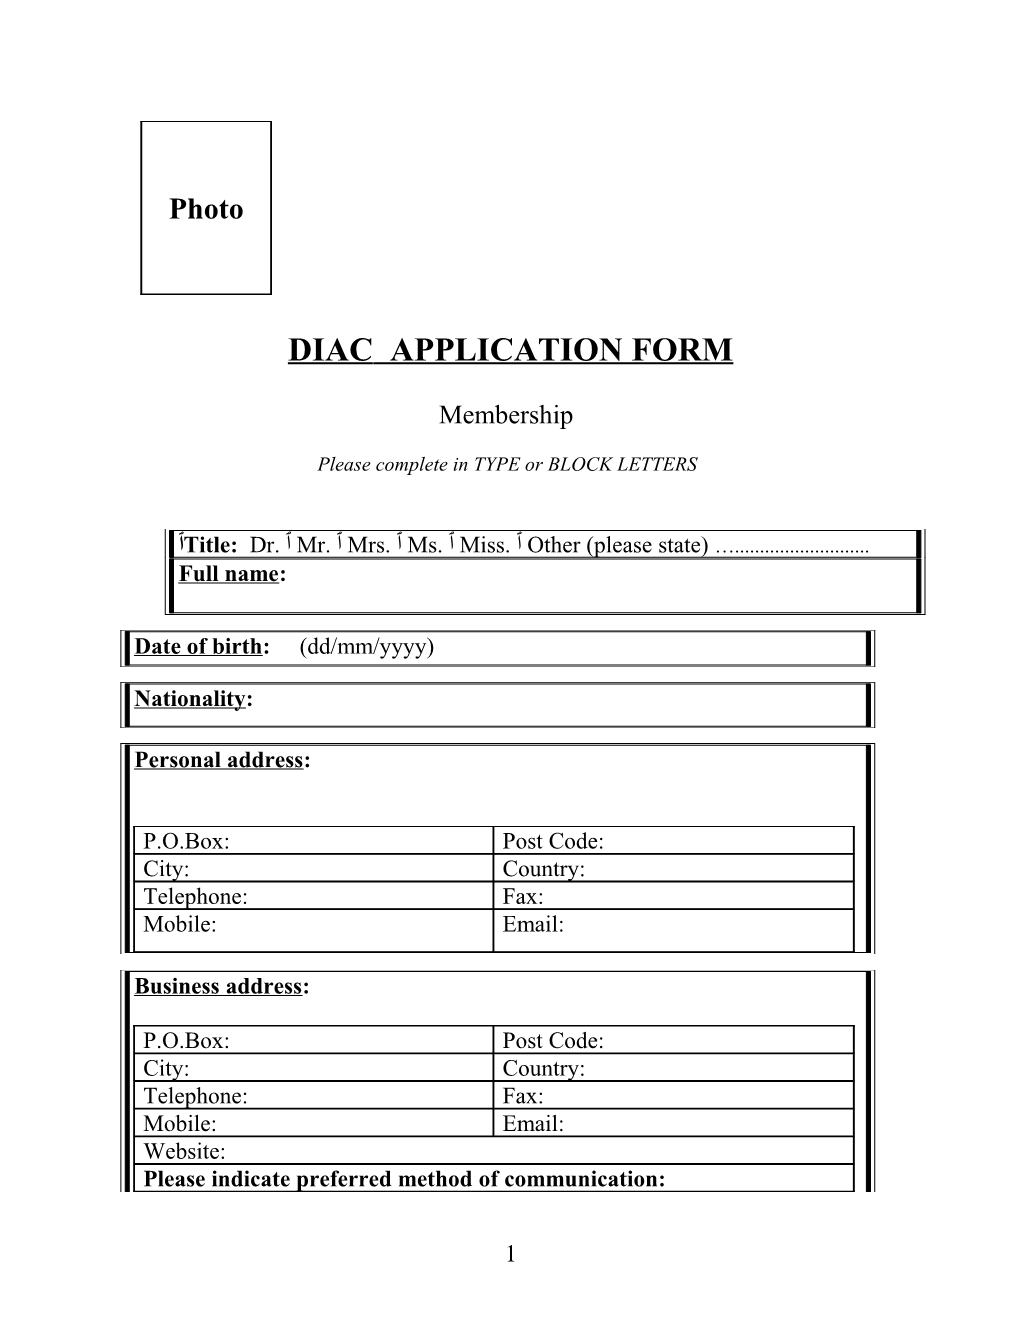 Diac Application Form